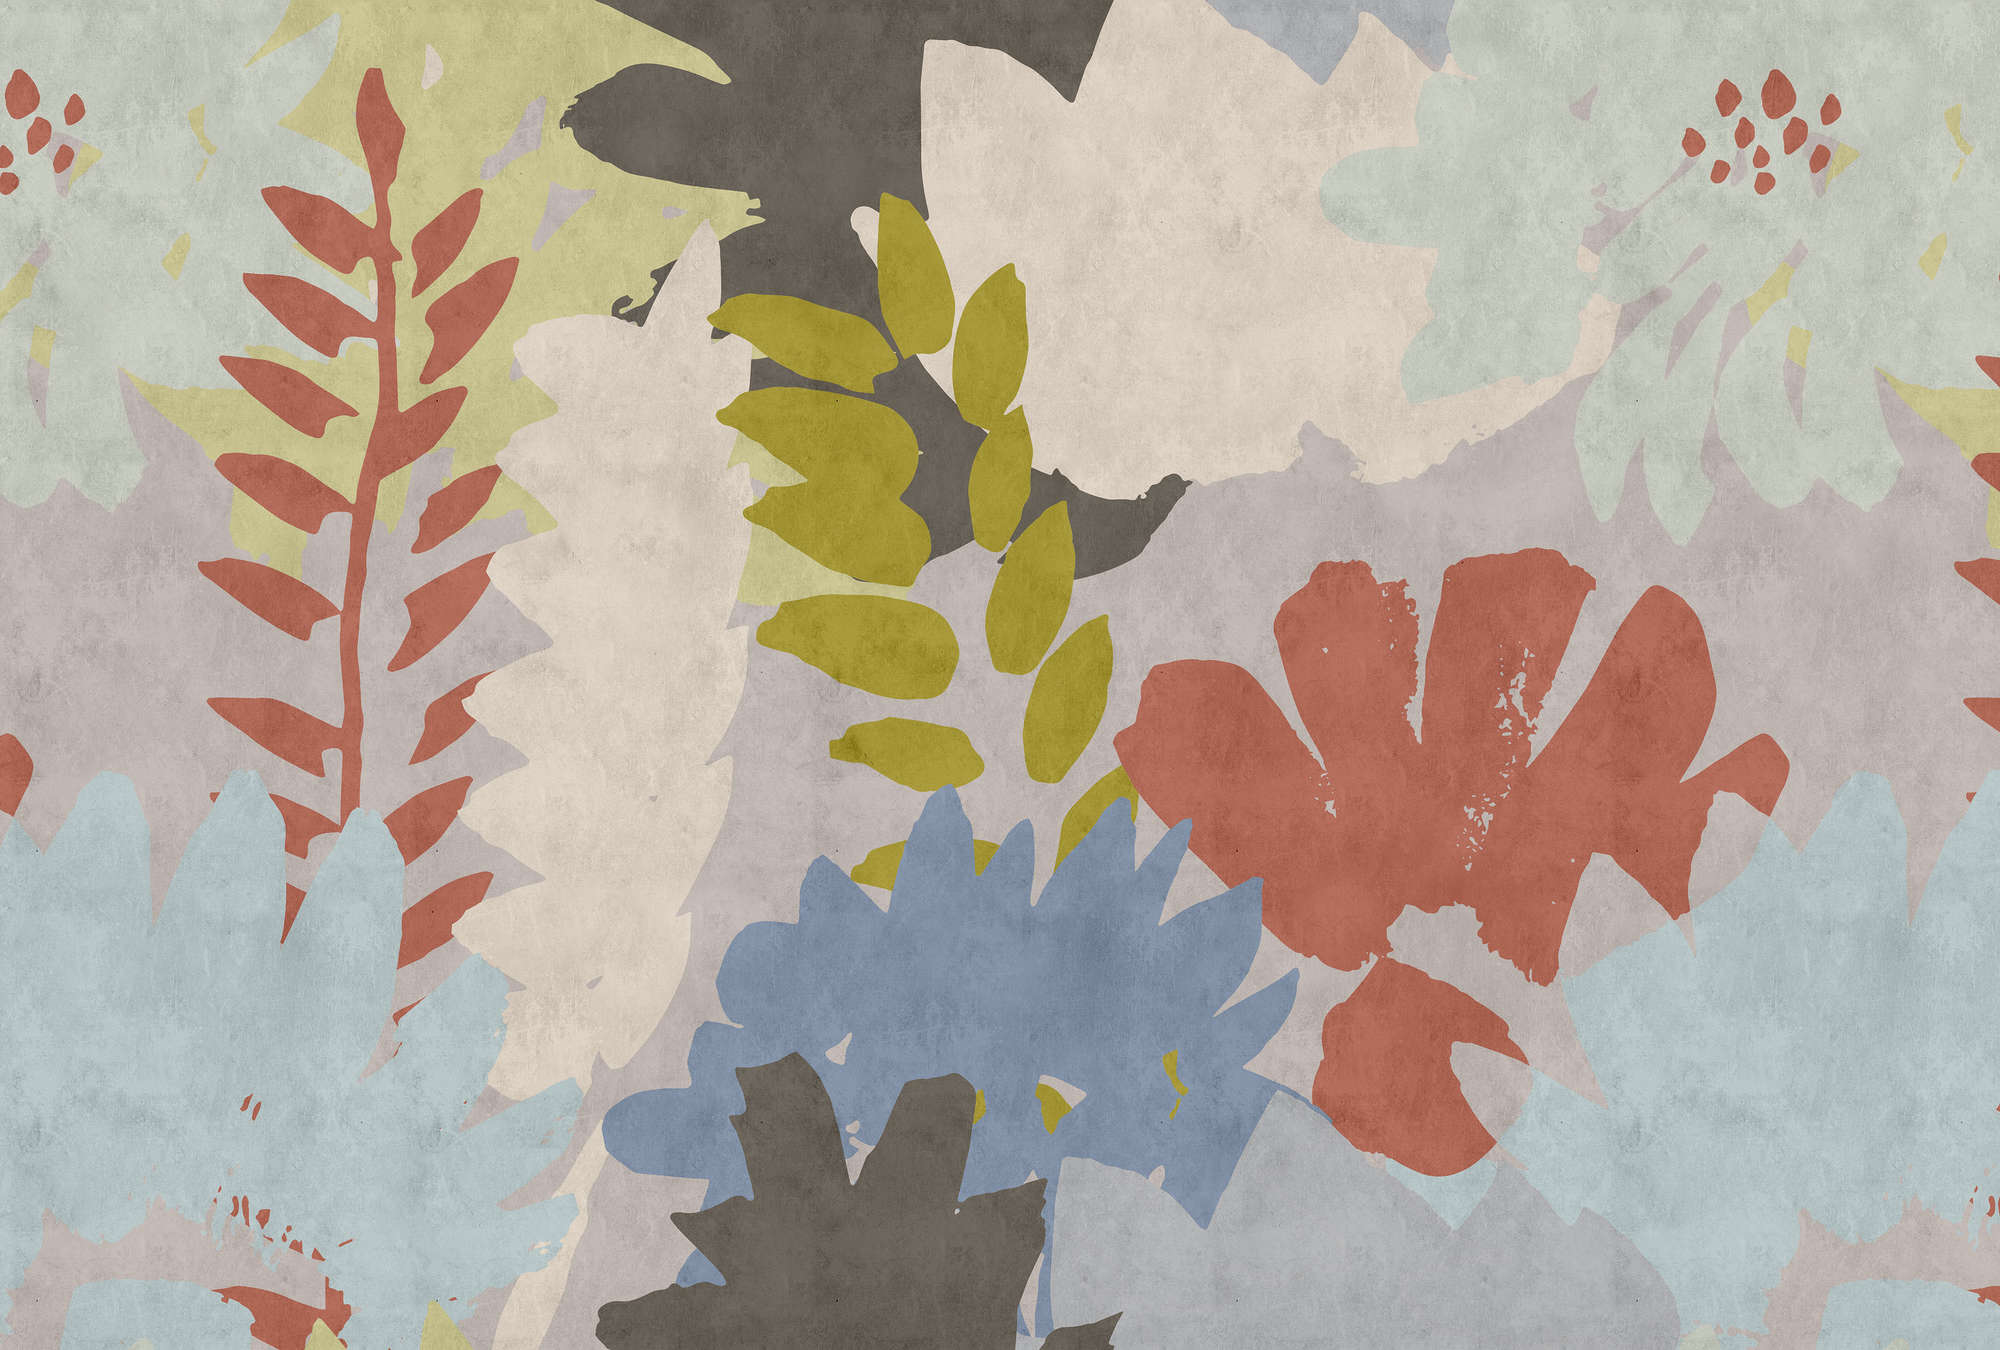             Floral Collage 3 - Abstract fotobehang in vloeipapierstructuur met bladmotief - Blauw, Crème | Matte gladde vliesstof
        